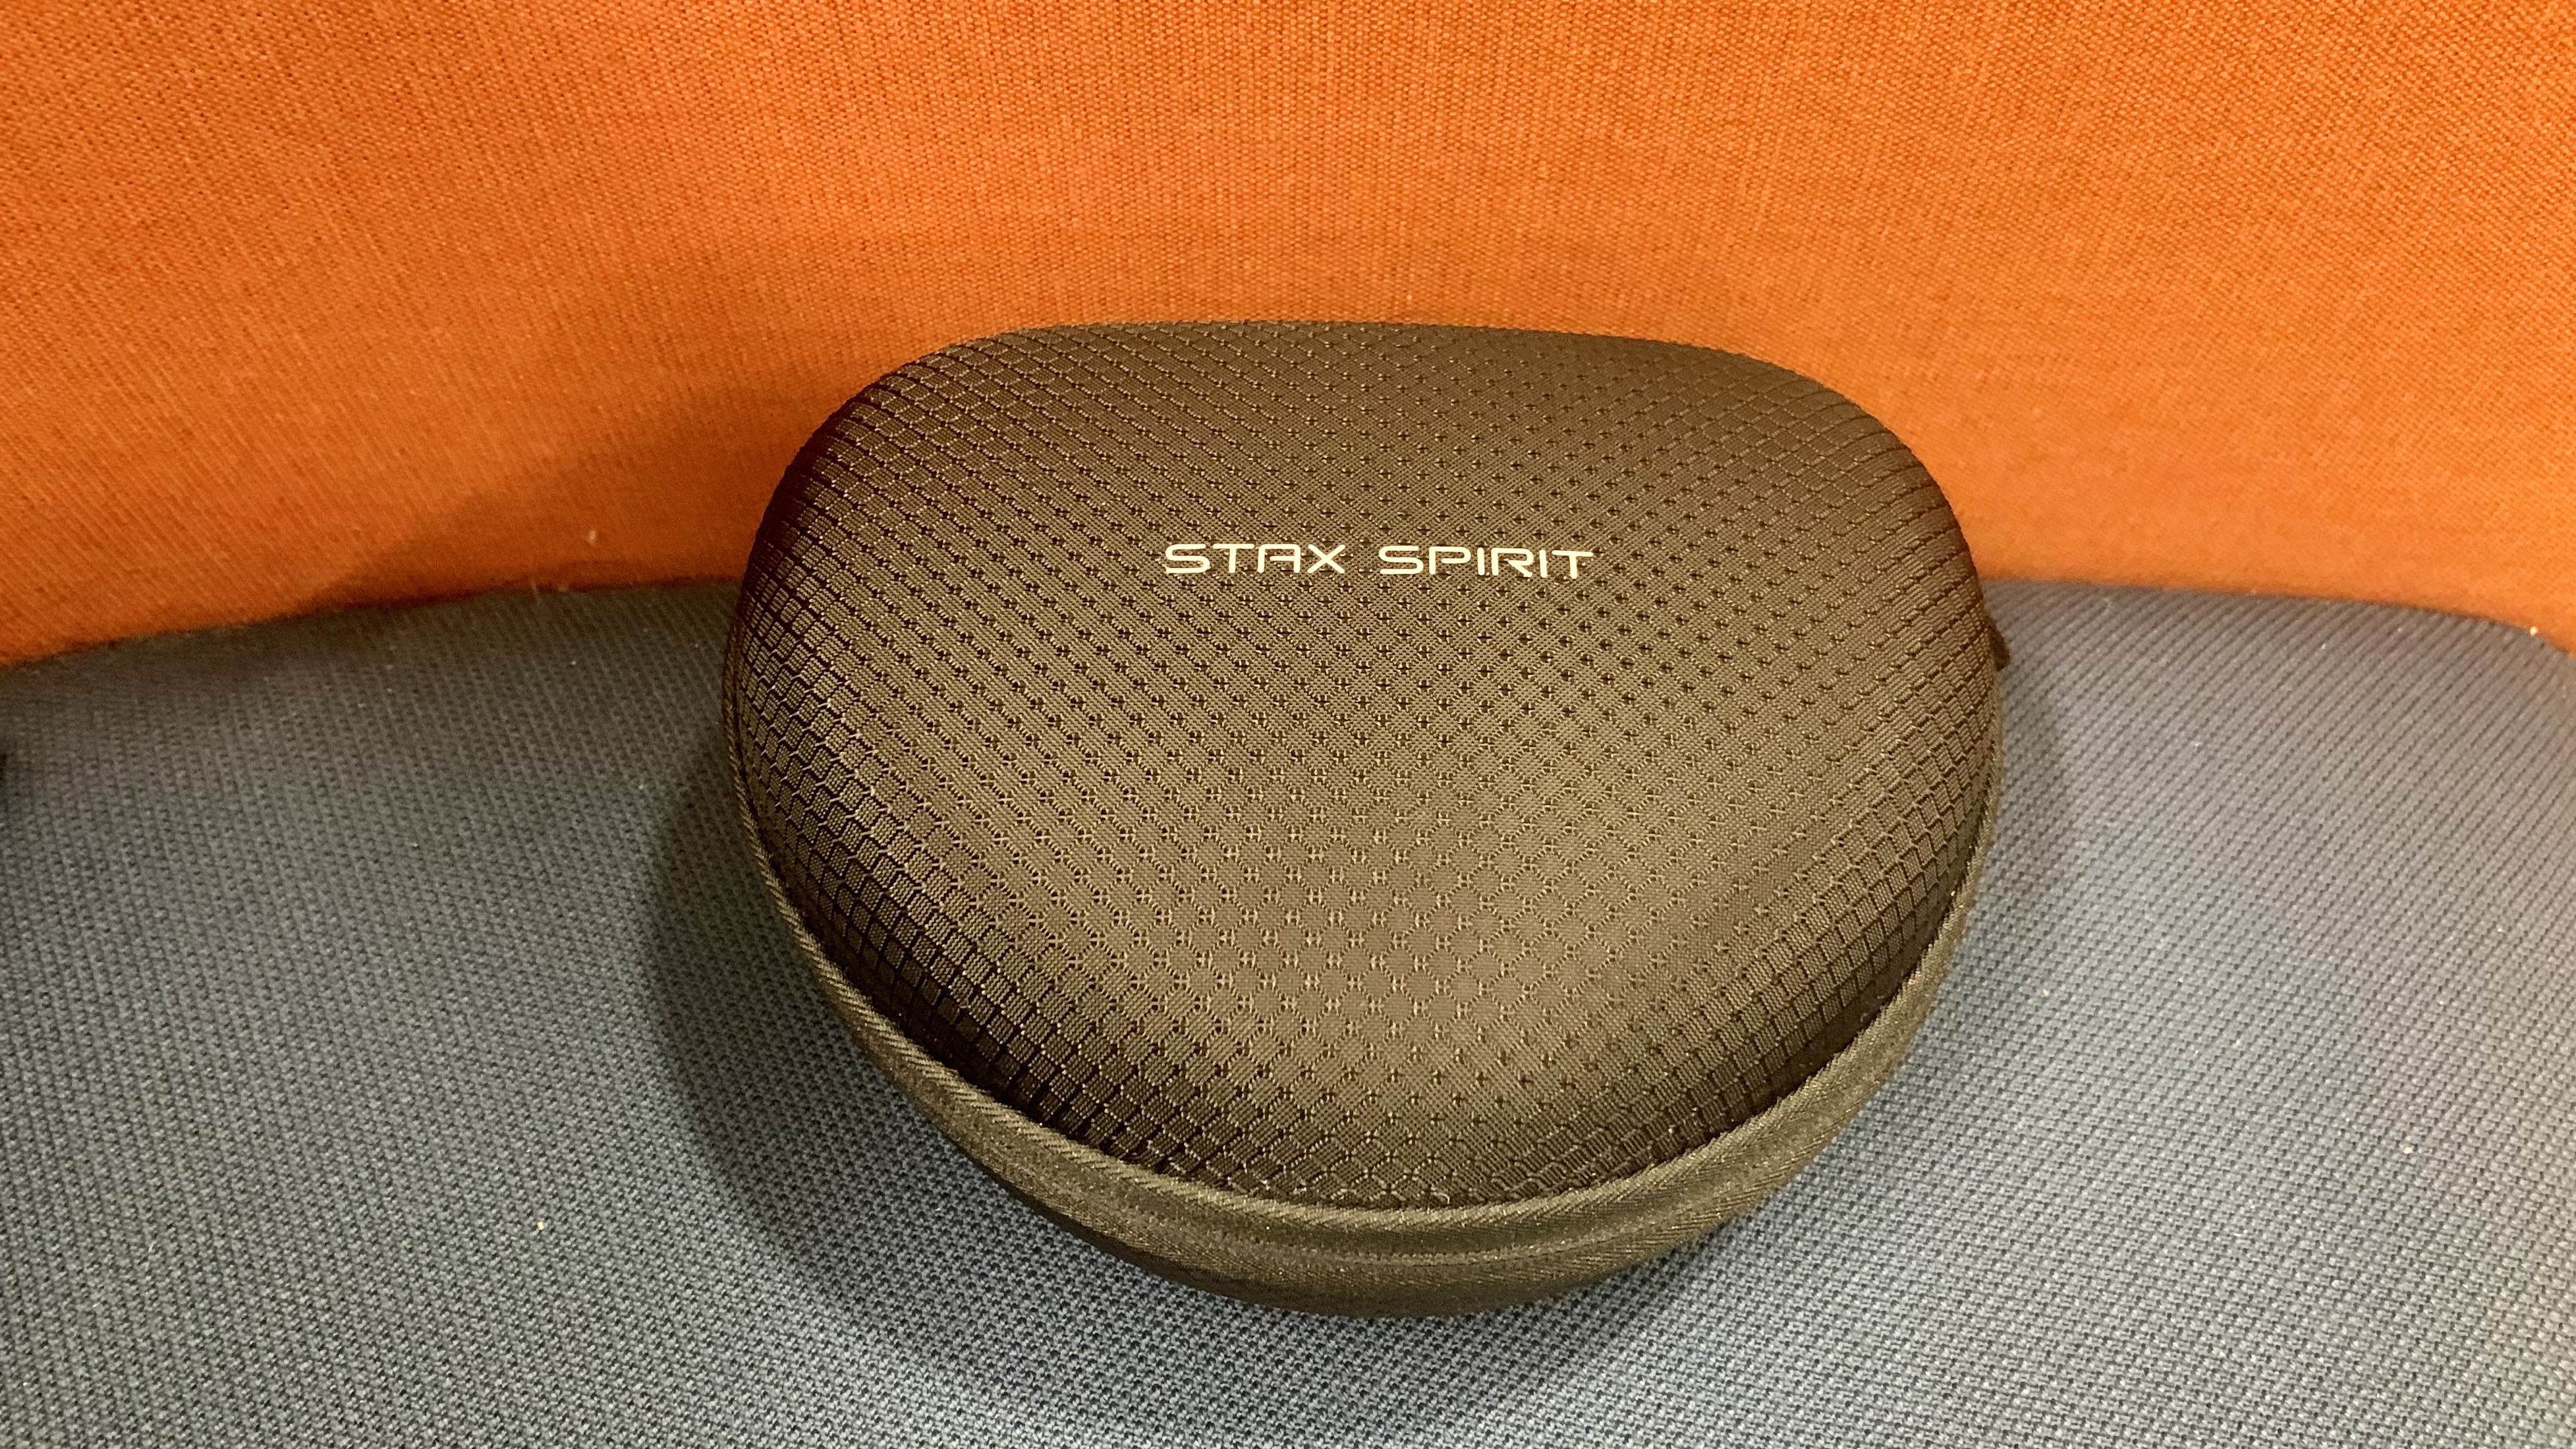 Edifier Stax Spirit S3 case, on orange and gray sofa